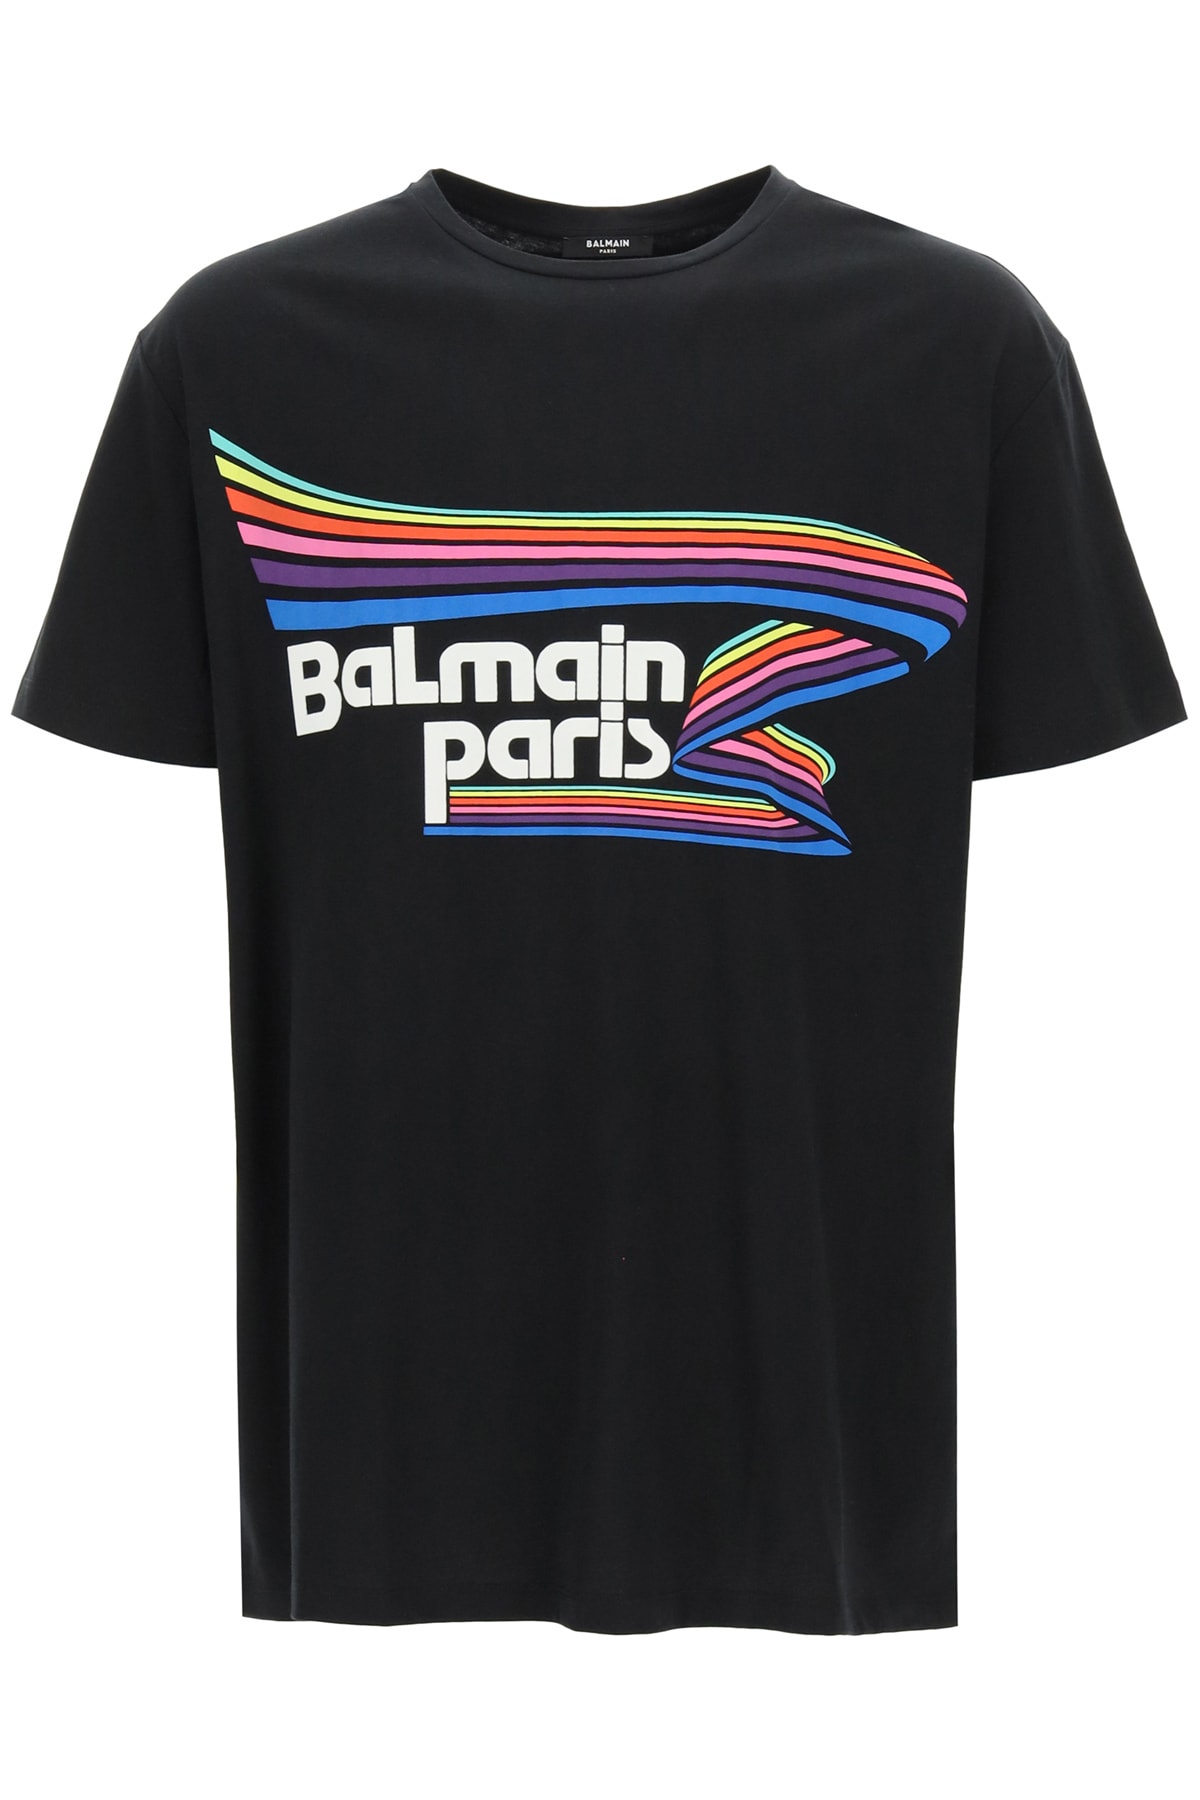 Balmain Multicolor Flock Rubber Logo Print T-shirt